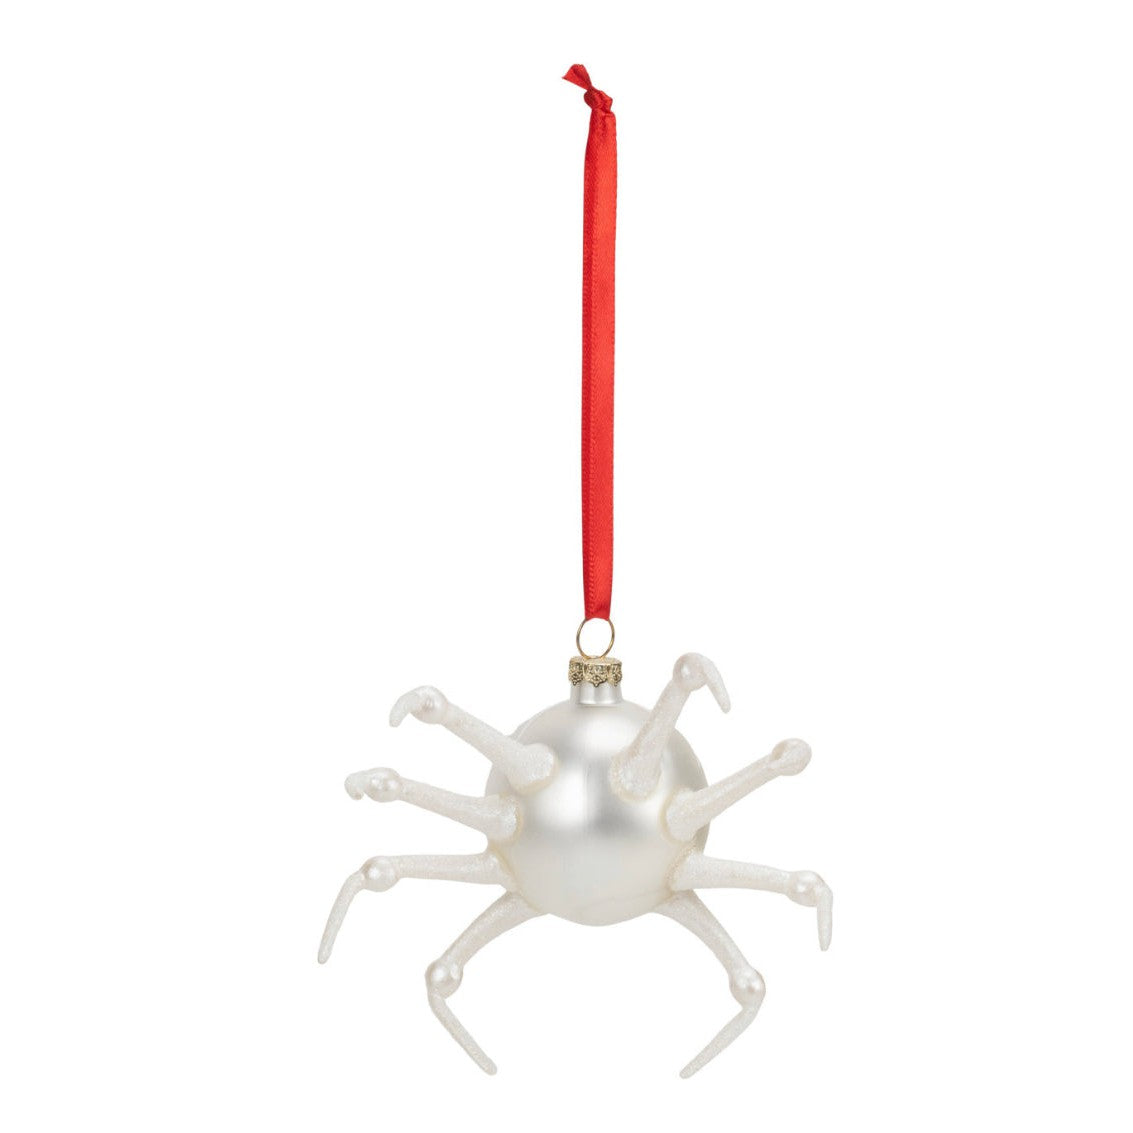 Blown Glass Spider Ornament